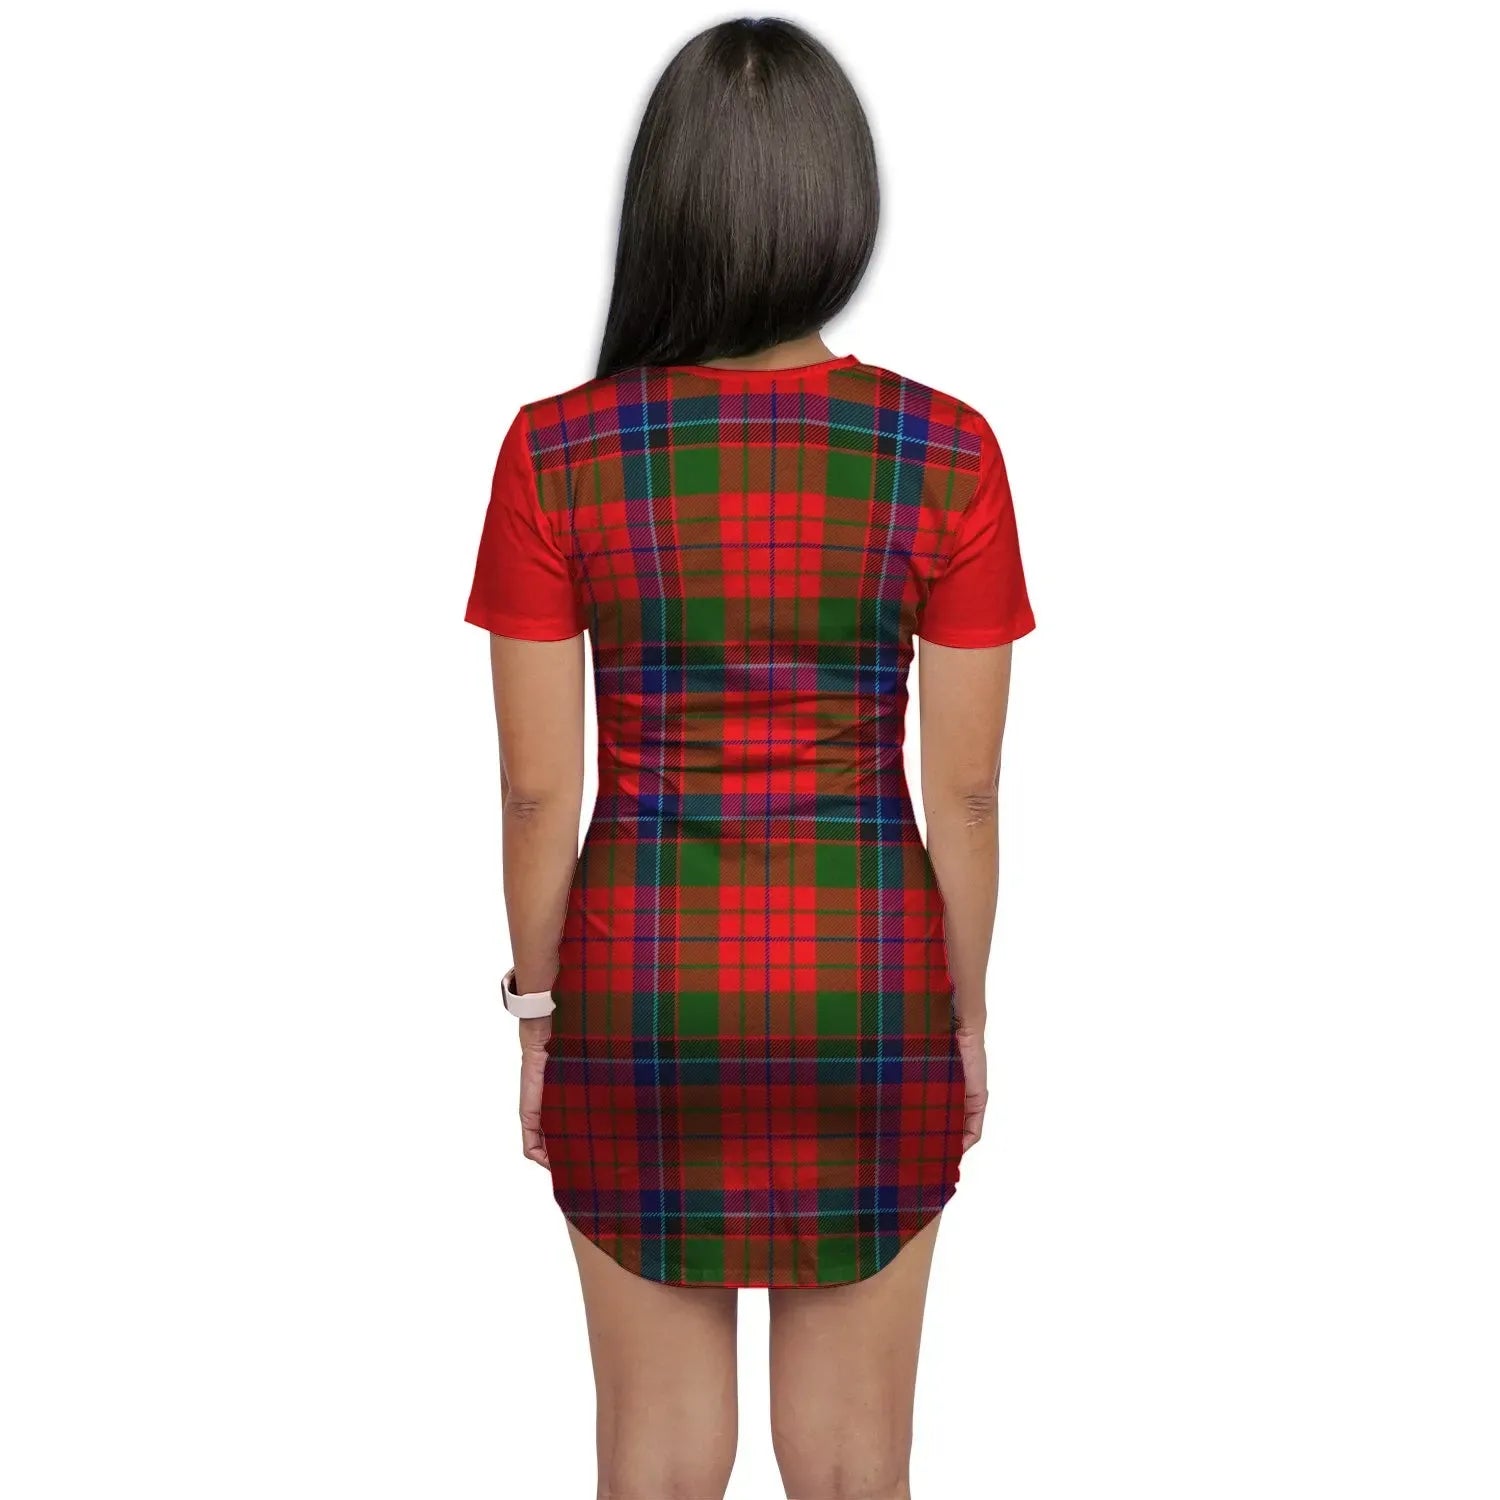 MacNicol (of Scorrybreac) Tartan Crest T-Shirt Dress